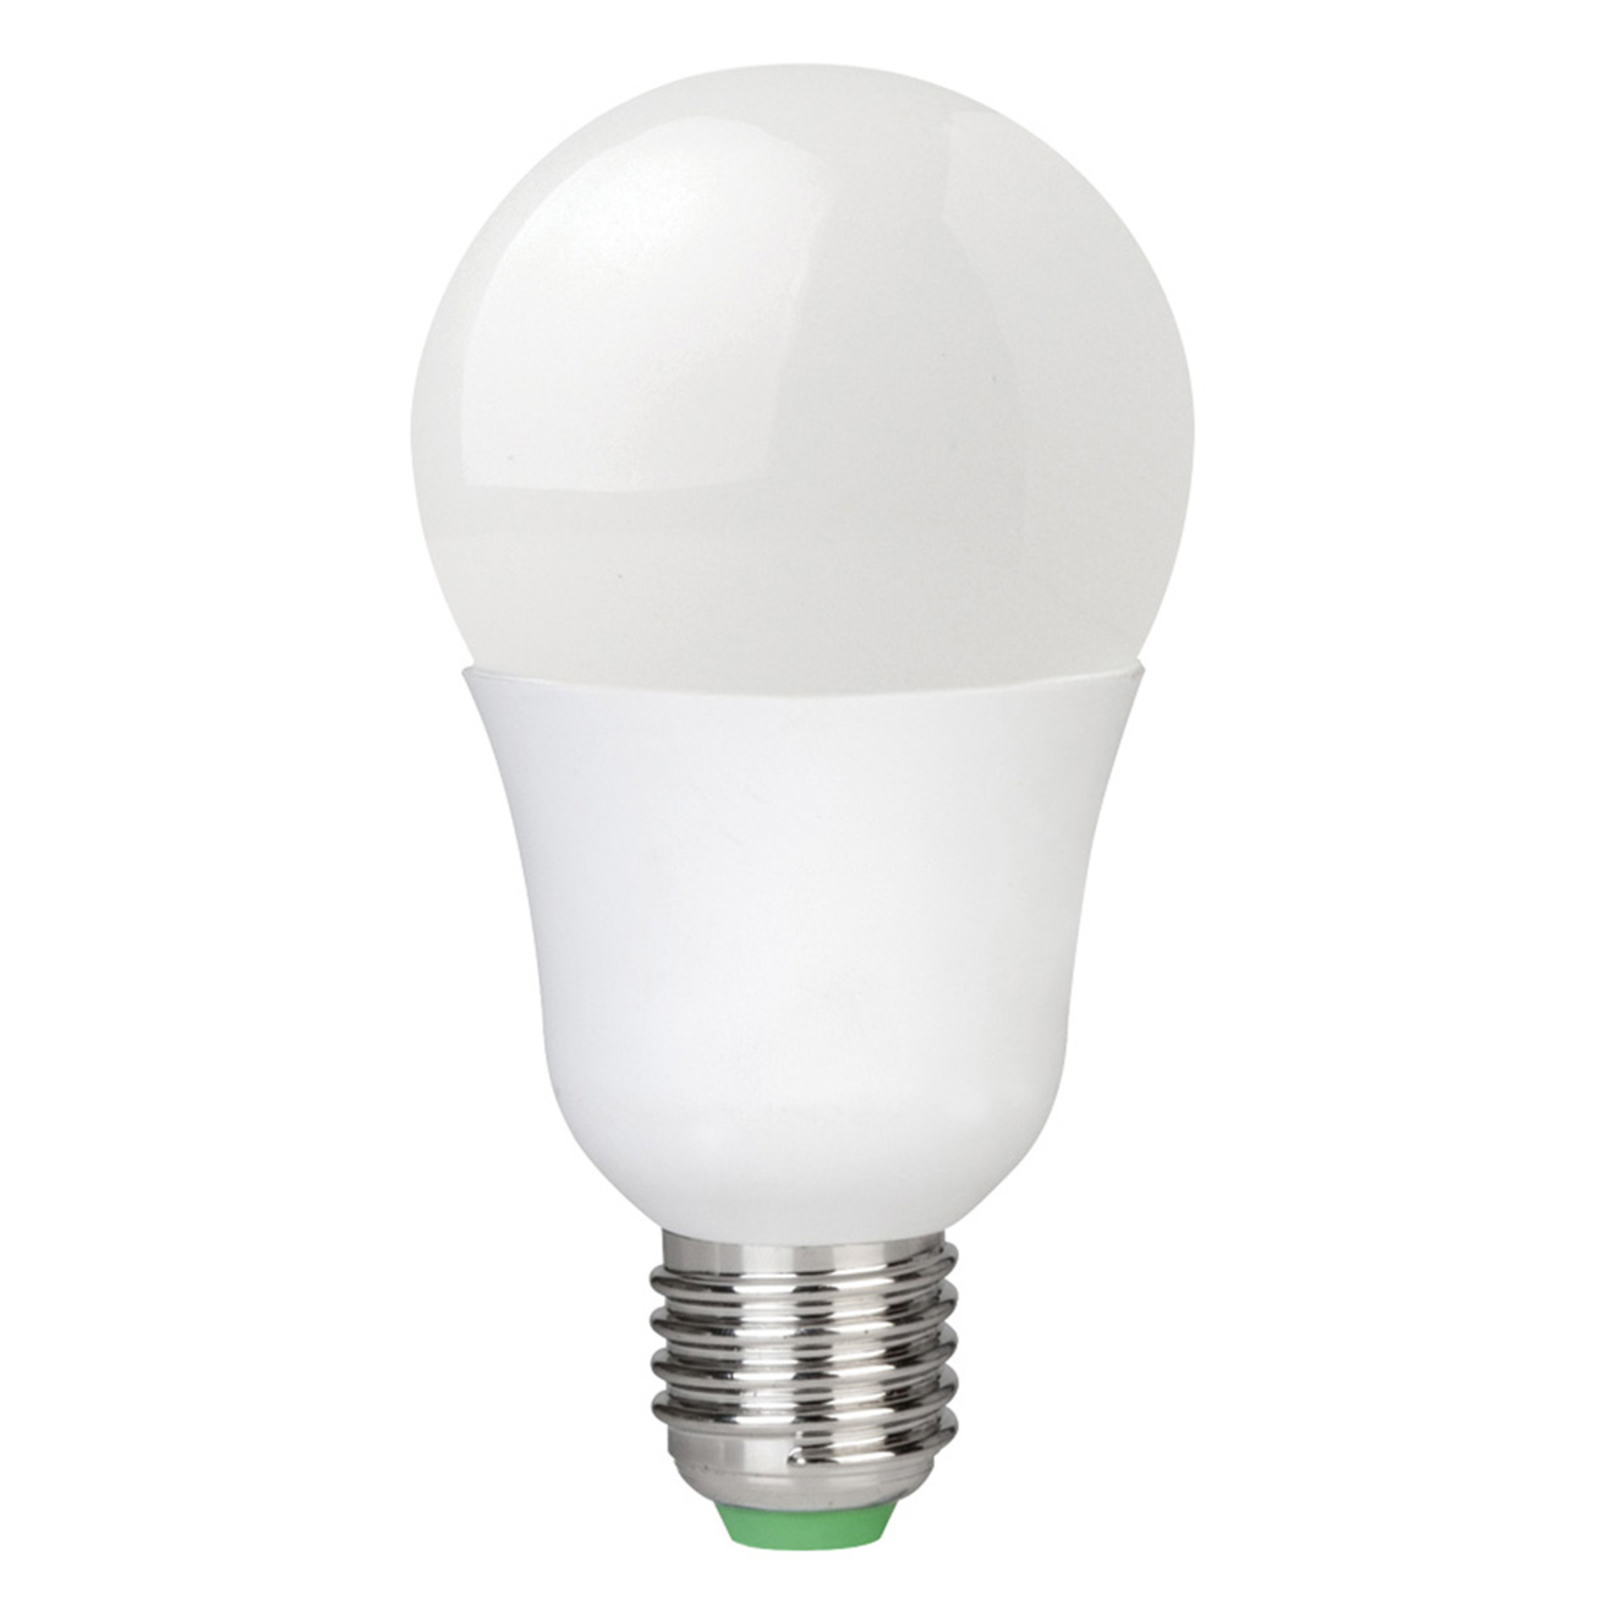 11W 828 lamp Smart by MEGAMAN | Lights.co.uk